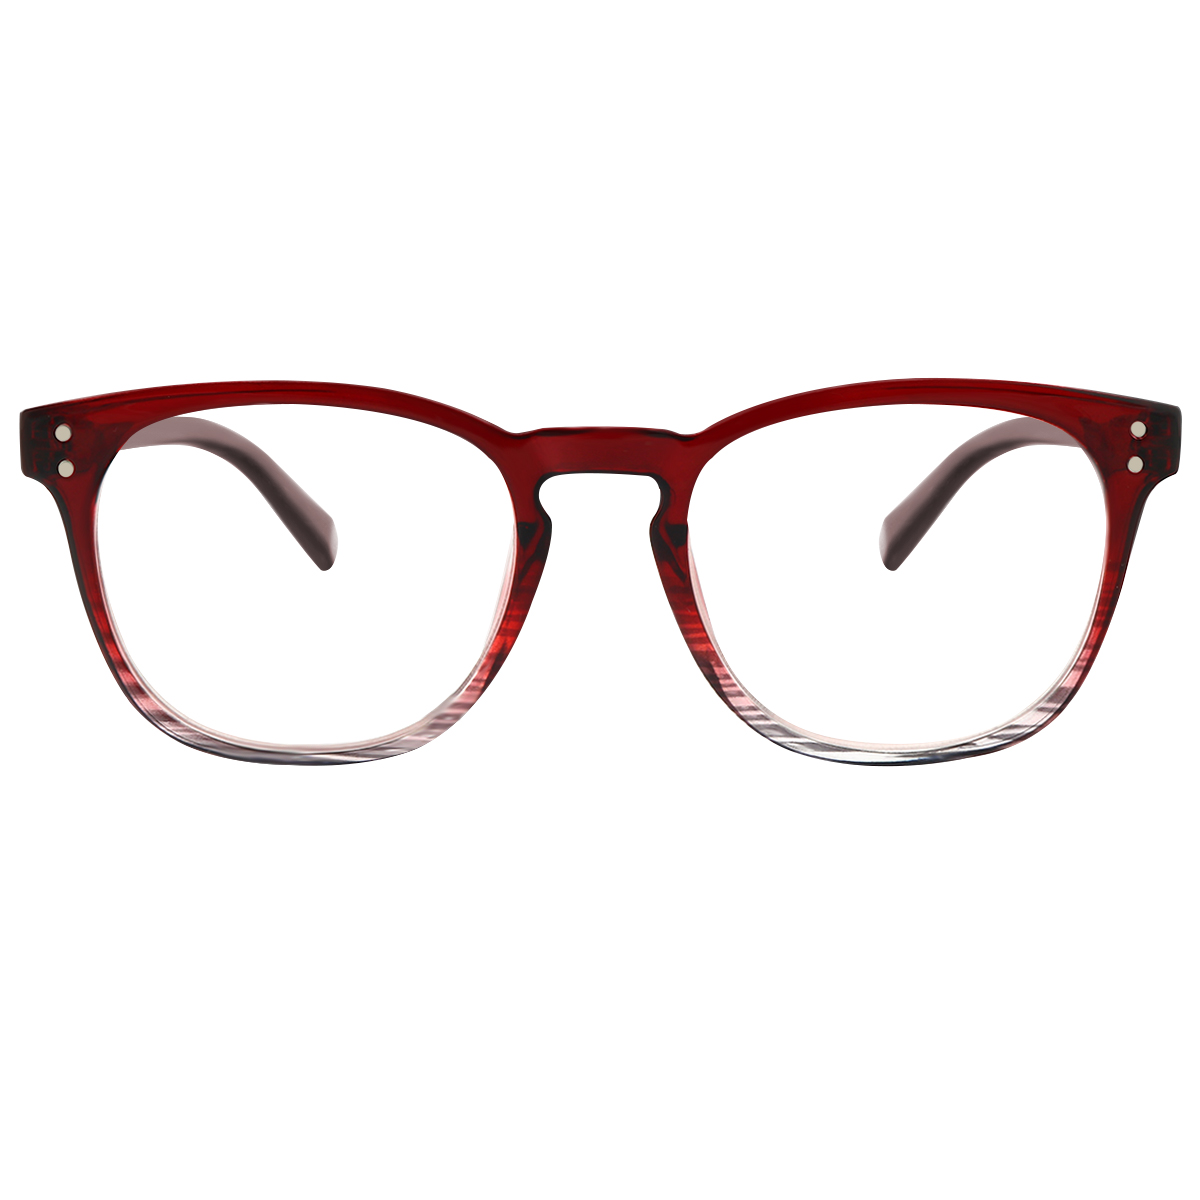 square red reading-glasses